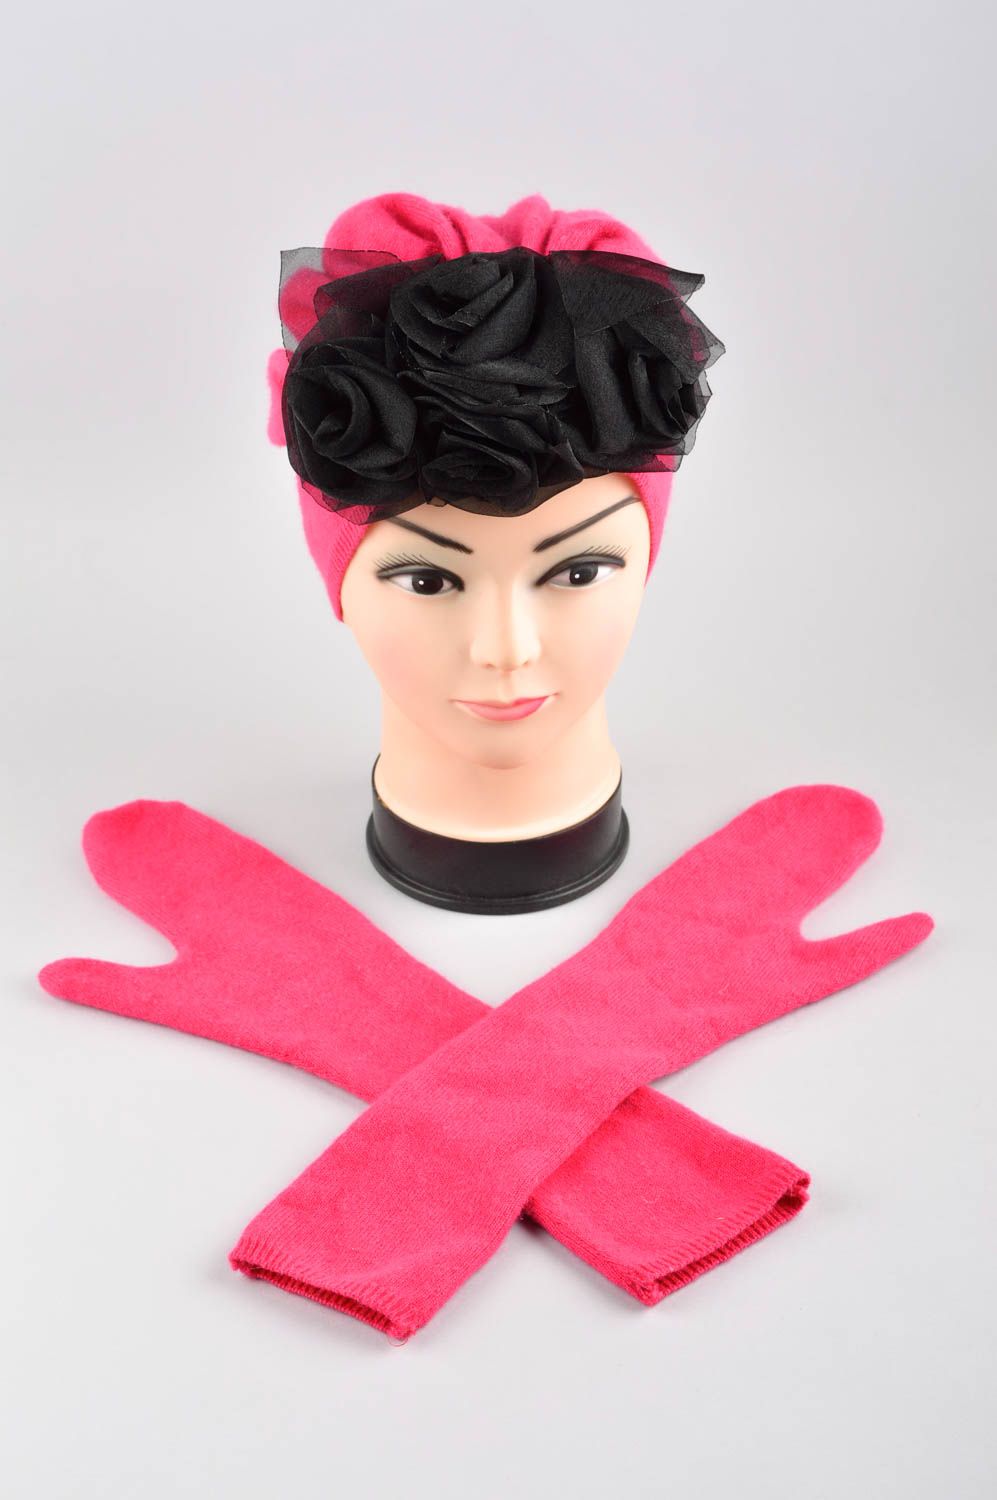 Handmade mittens pink winter hat designer winter accessory set for women photo 1